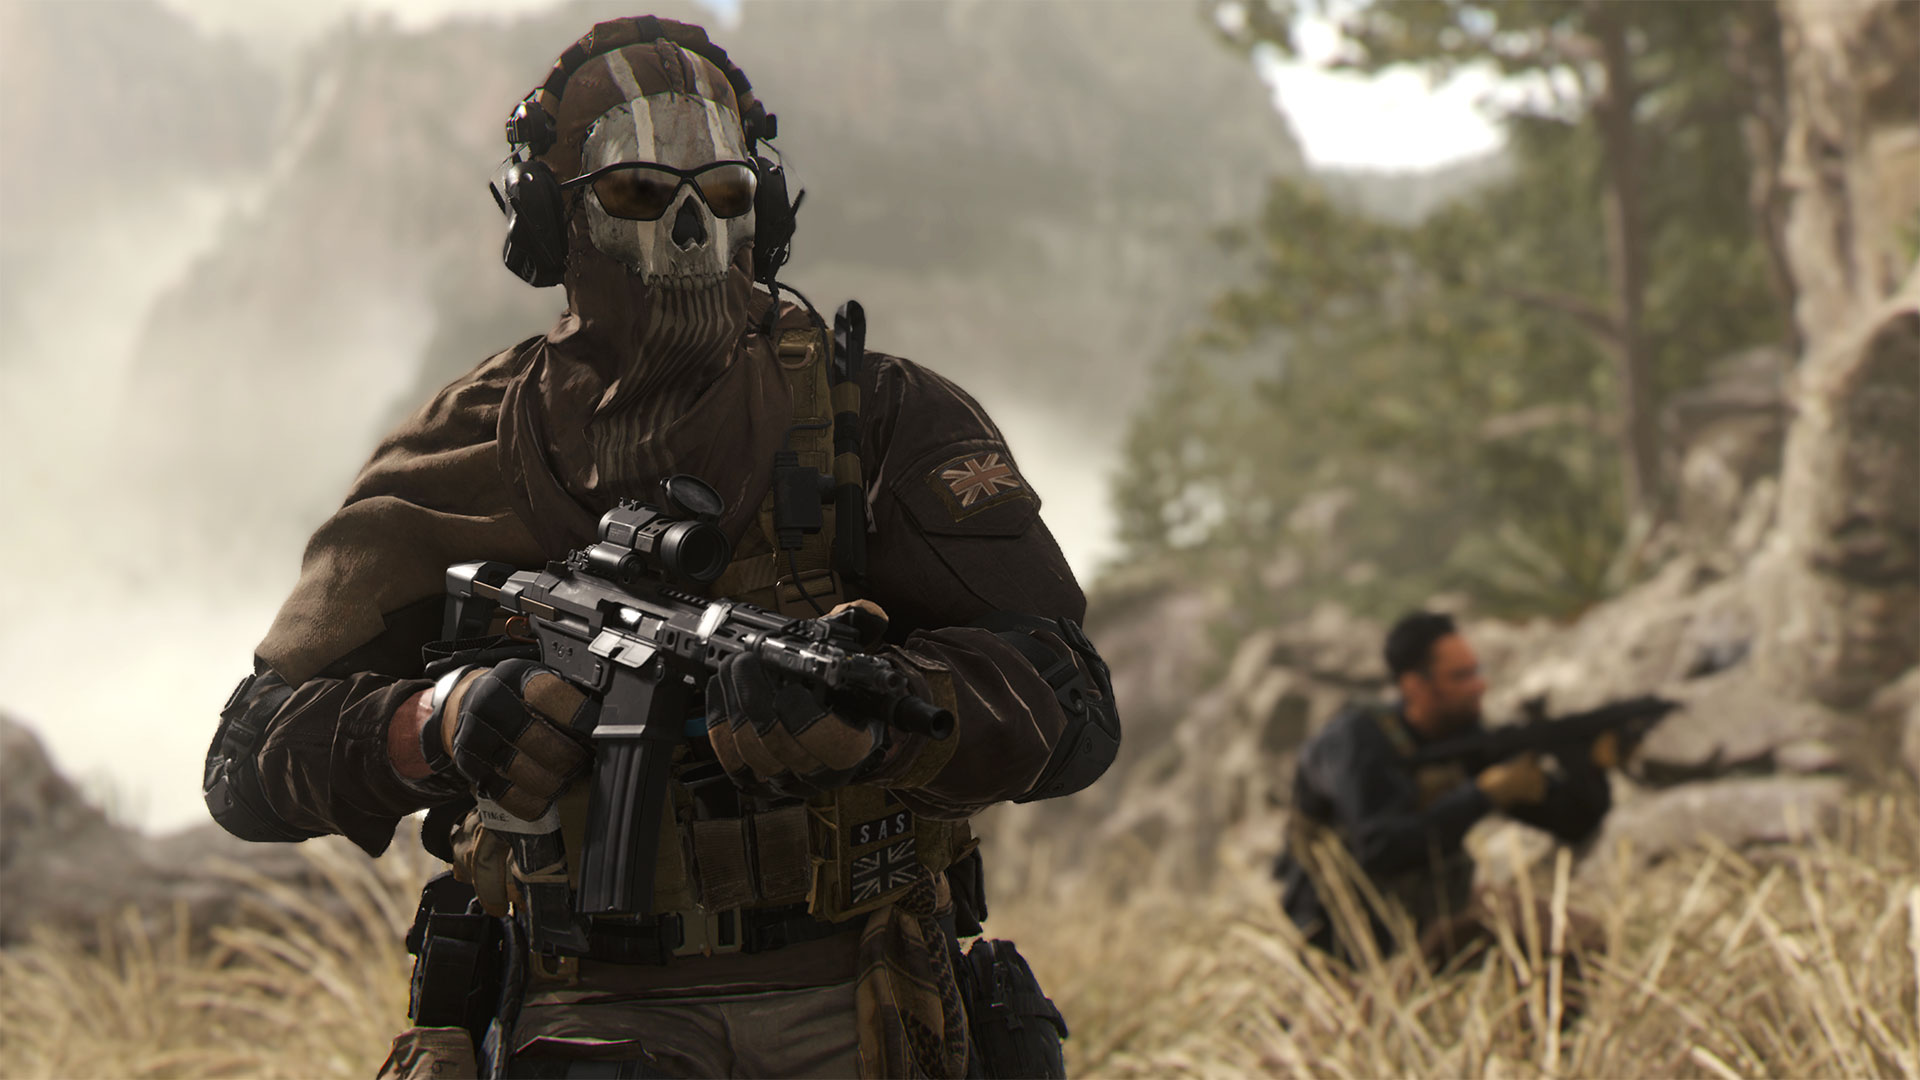 ✅ Call of Duty: Modern Warfare II Beta Access GLOBAL 🌎